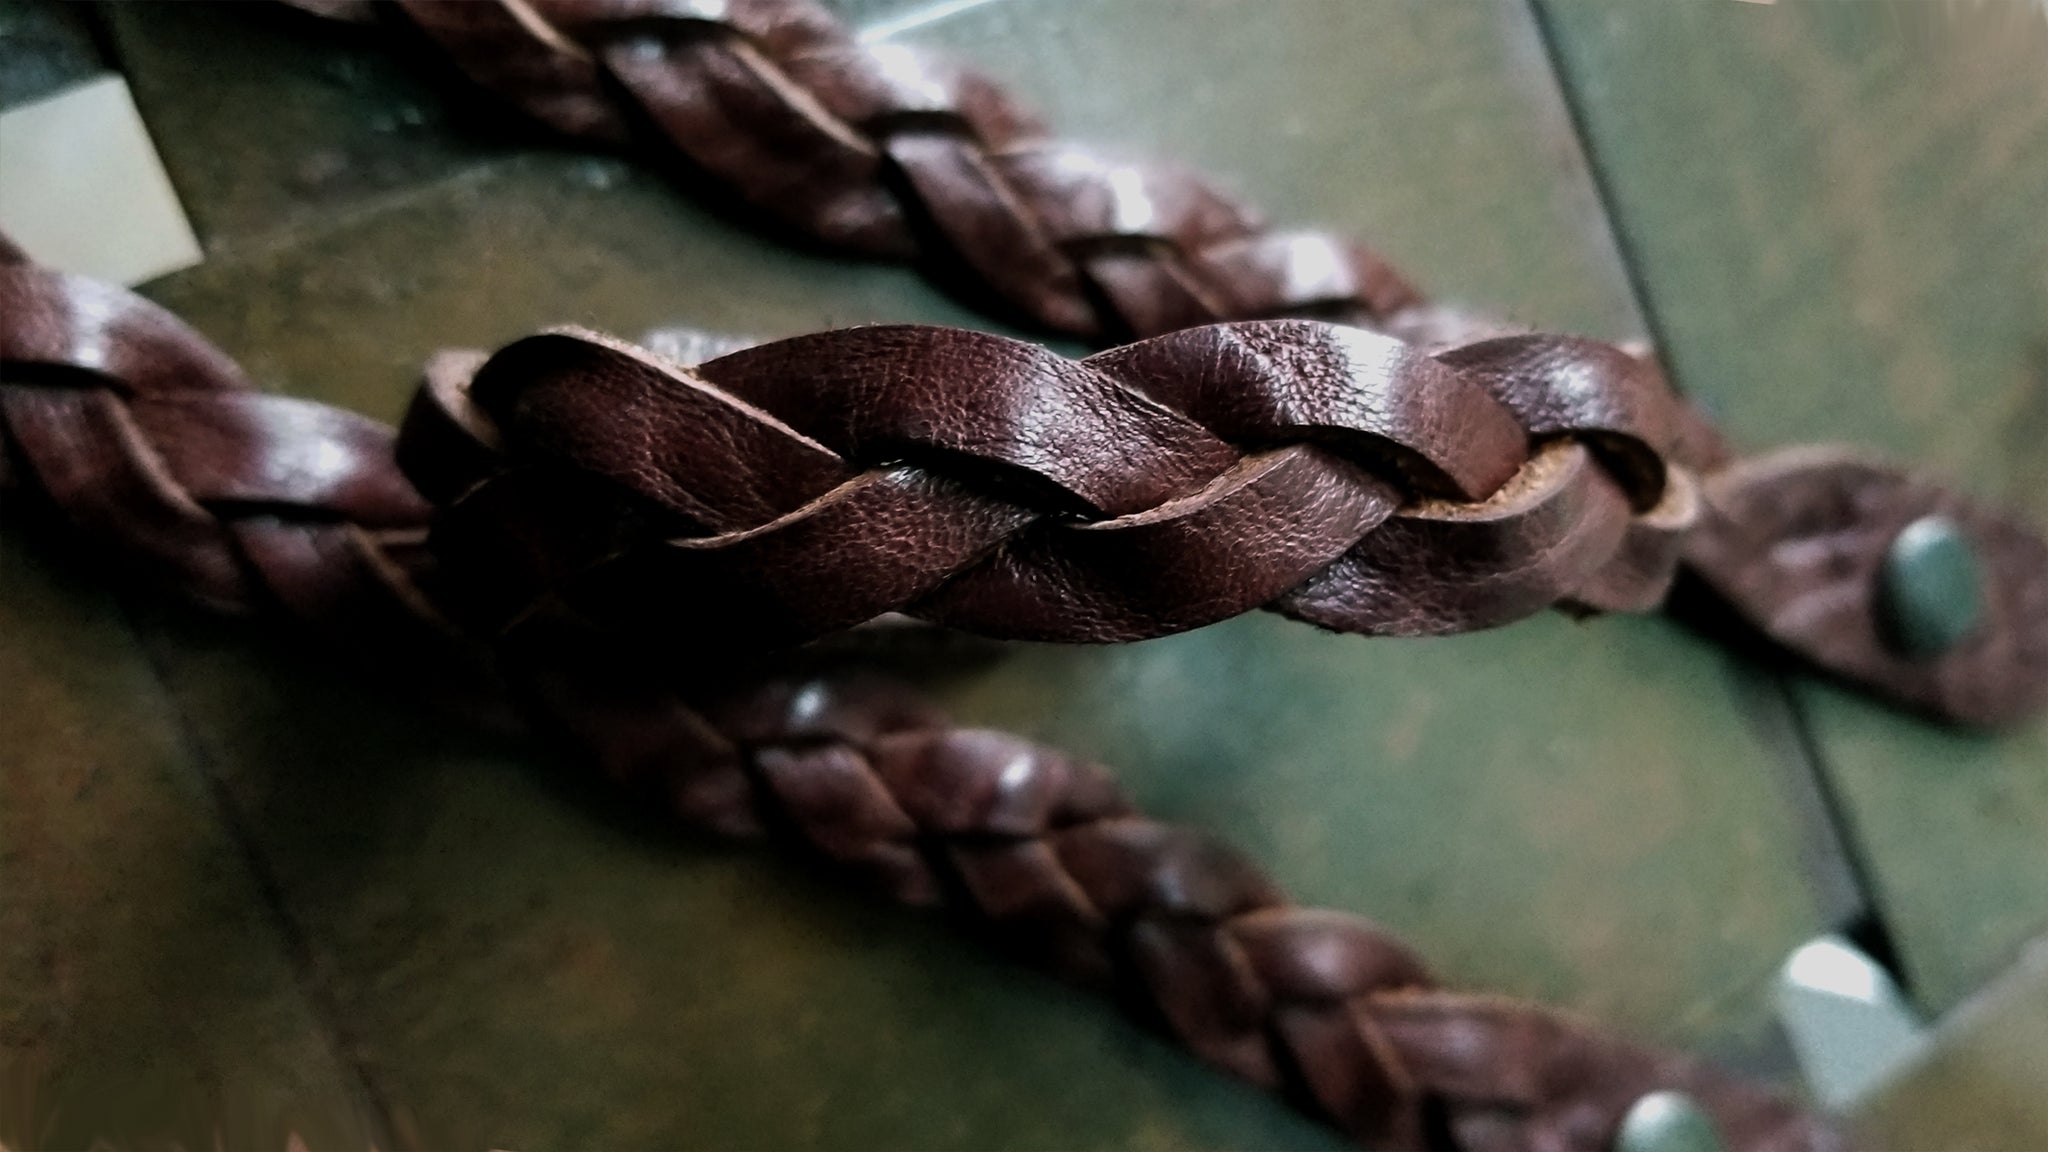 mystery braid (trick braid) braided leather bracelet, men's women's in the color Cognac